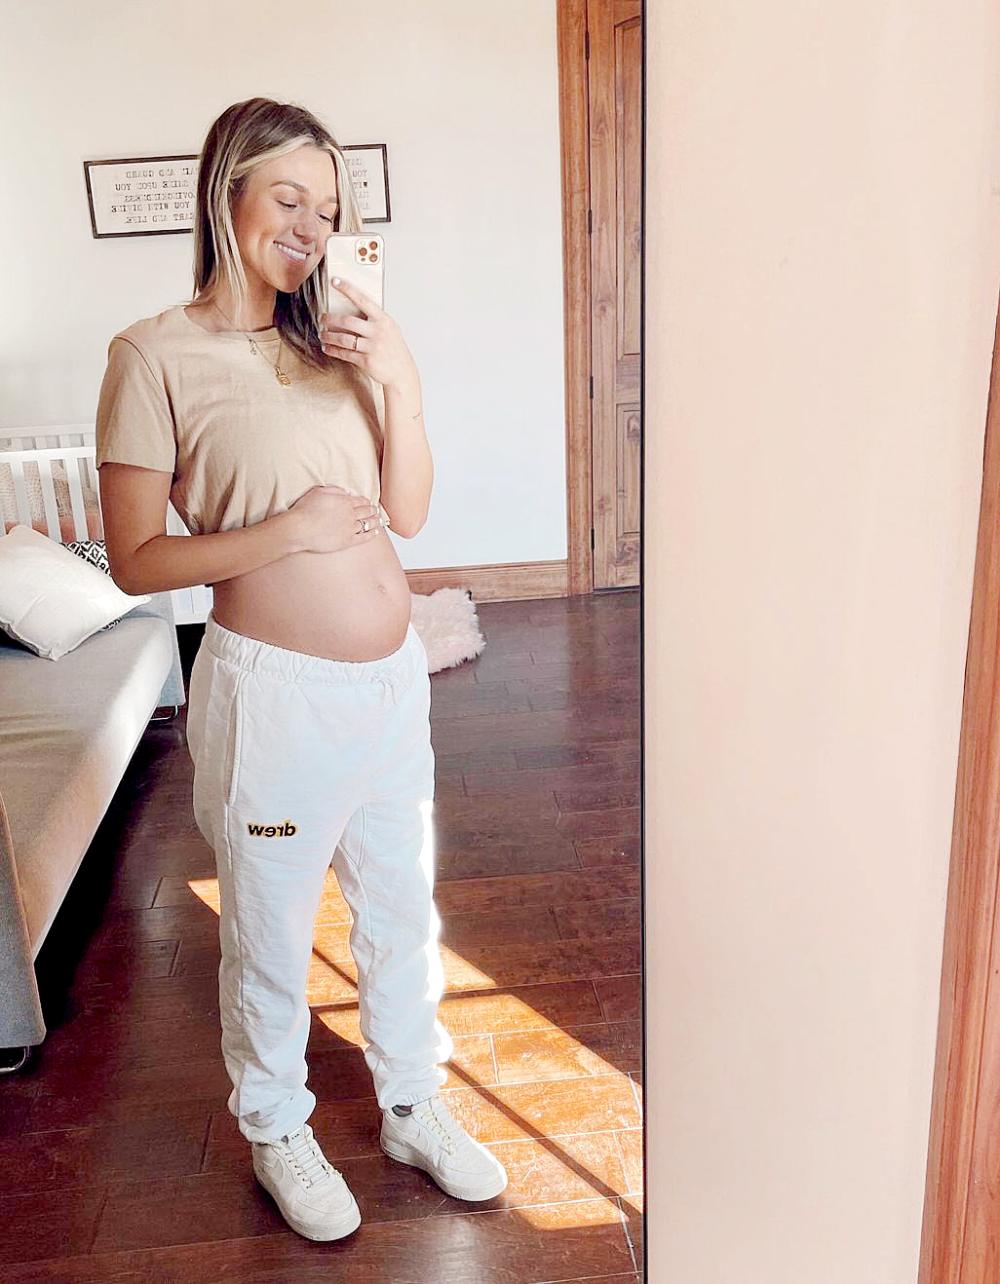 Pregnant Sadie Robertson Shows Bare Baby Bump at 25 Weeks